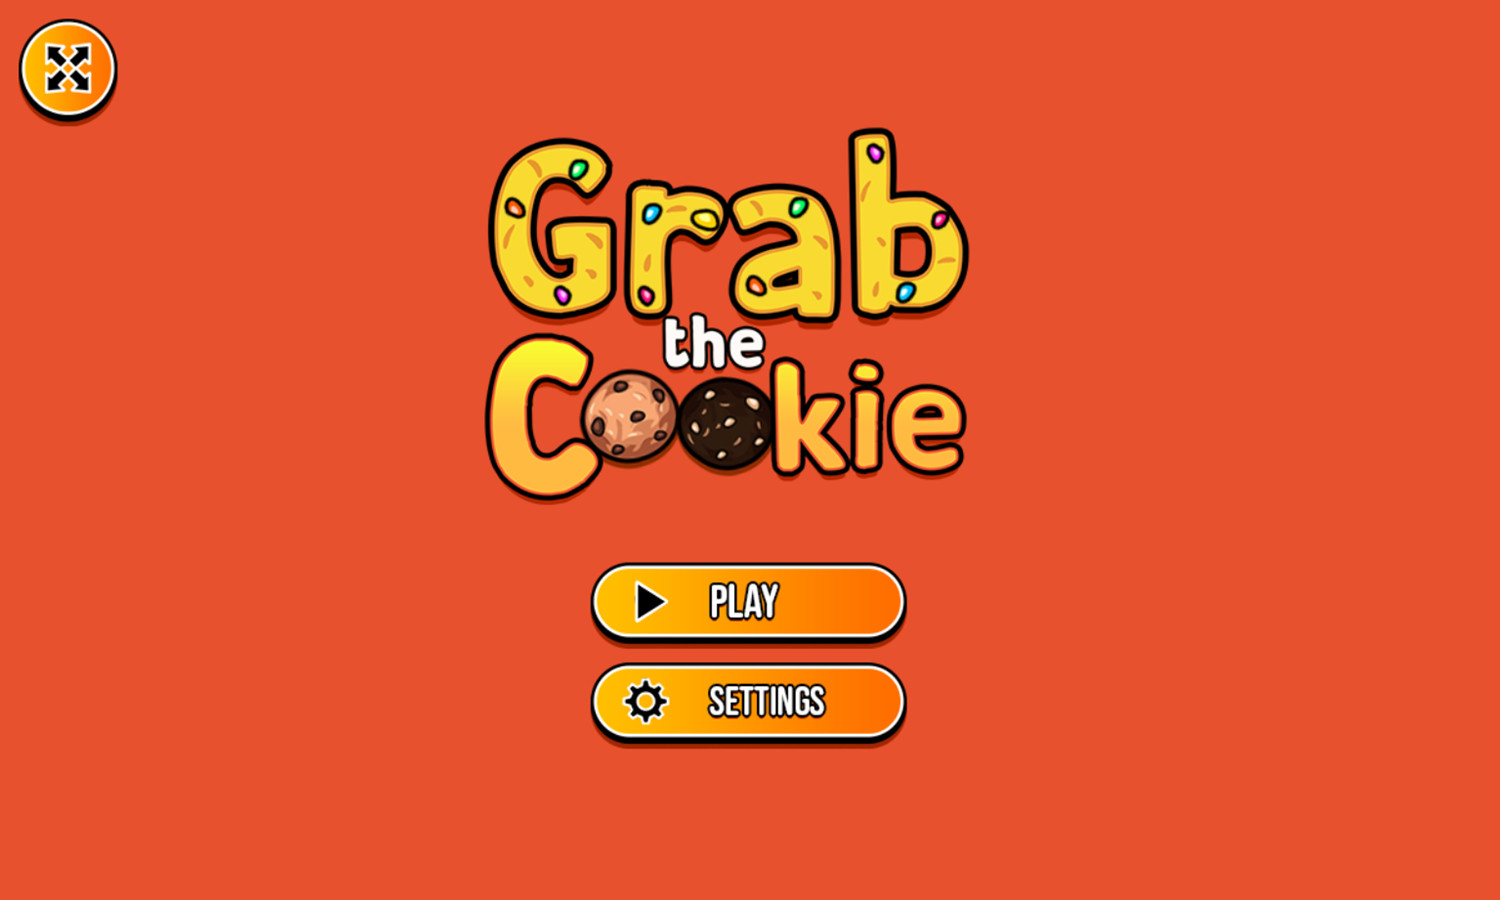 Grab The Cookie Game Welcome Screen Screenshot.